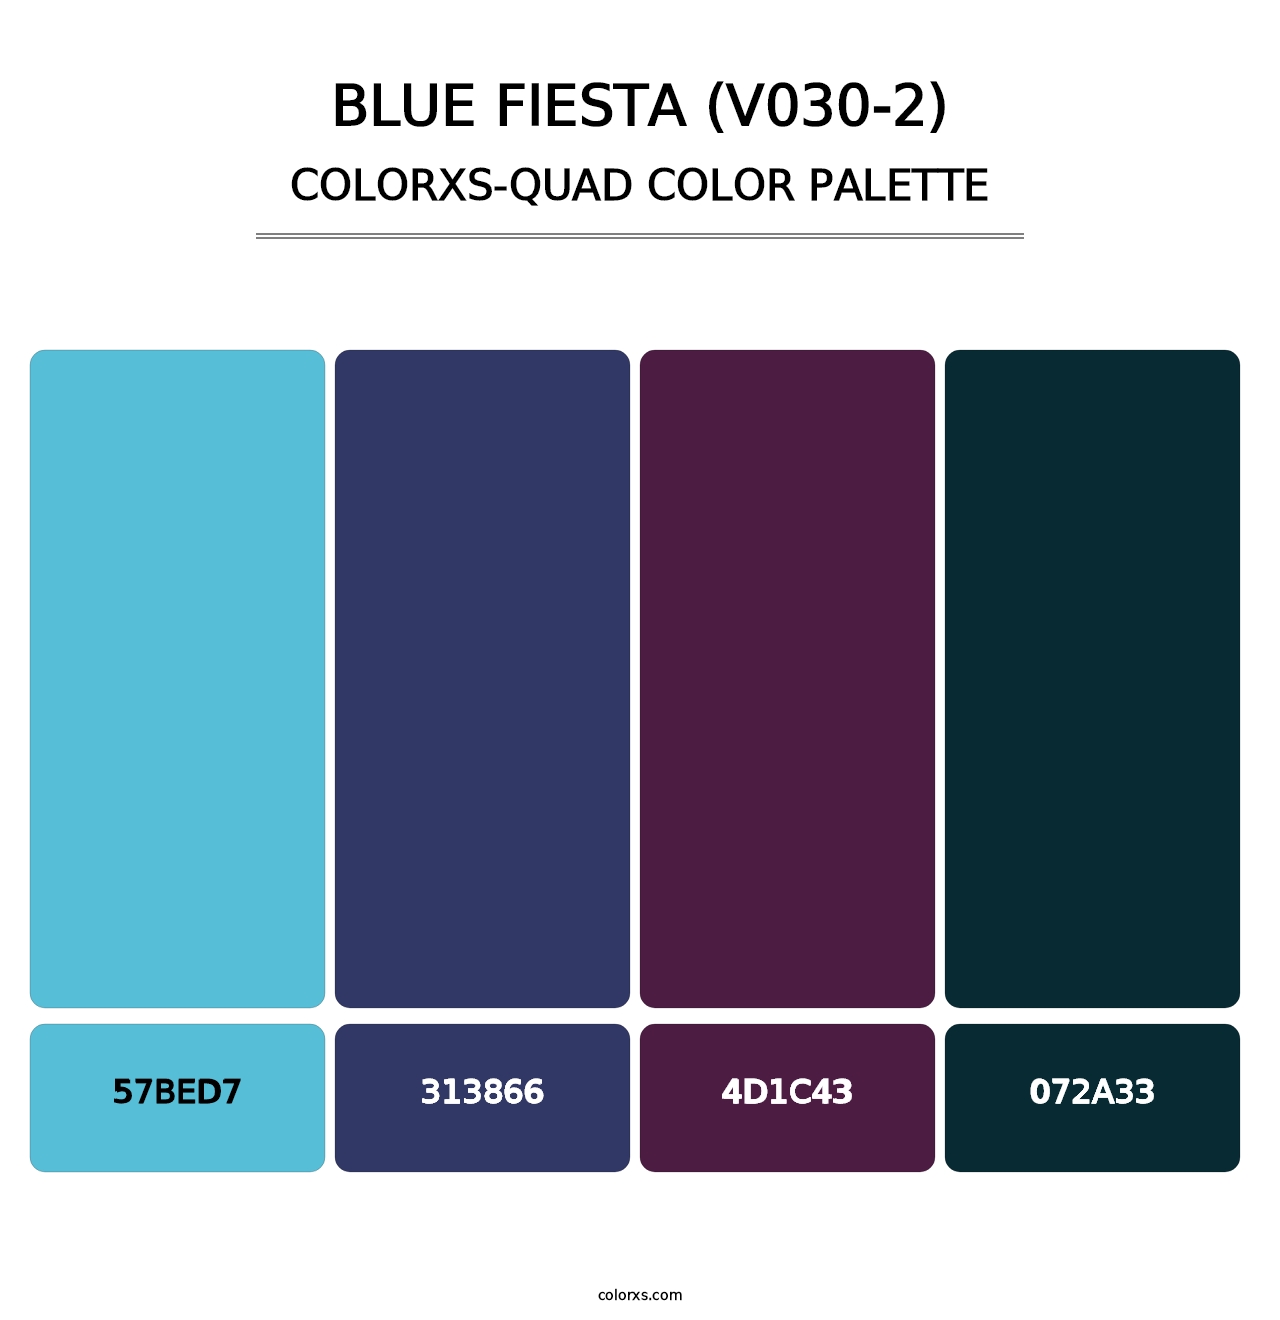 Blue Fiesta (V030-2) - Colorxs Quad Palette